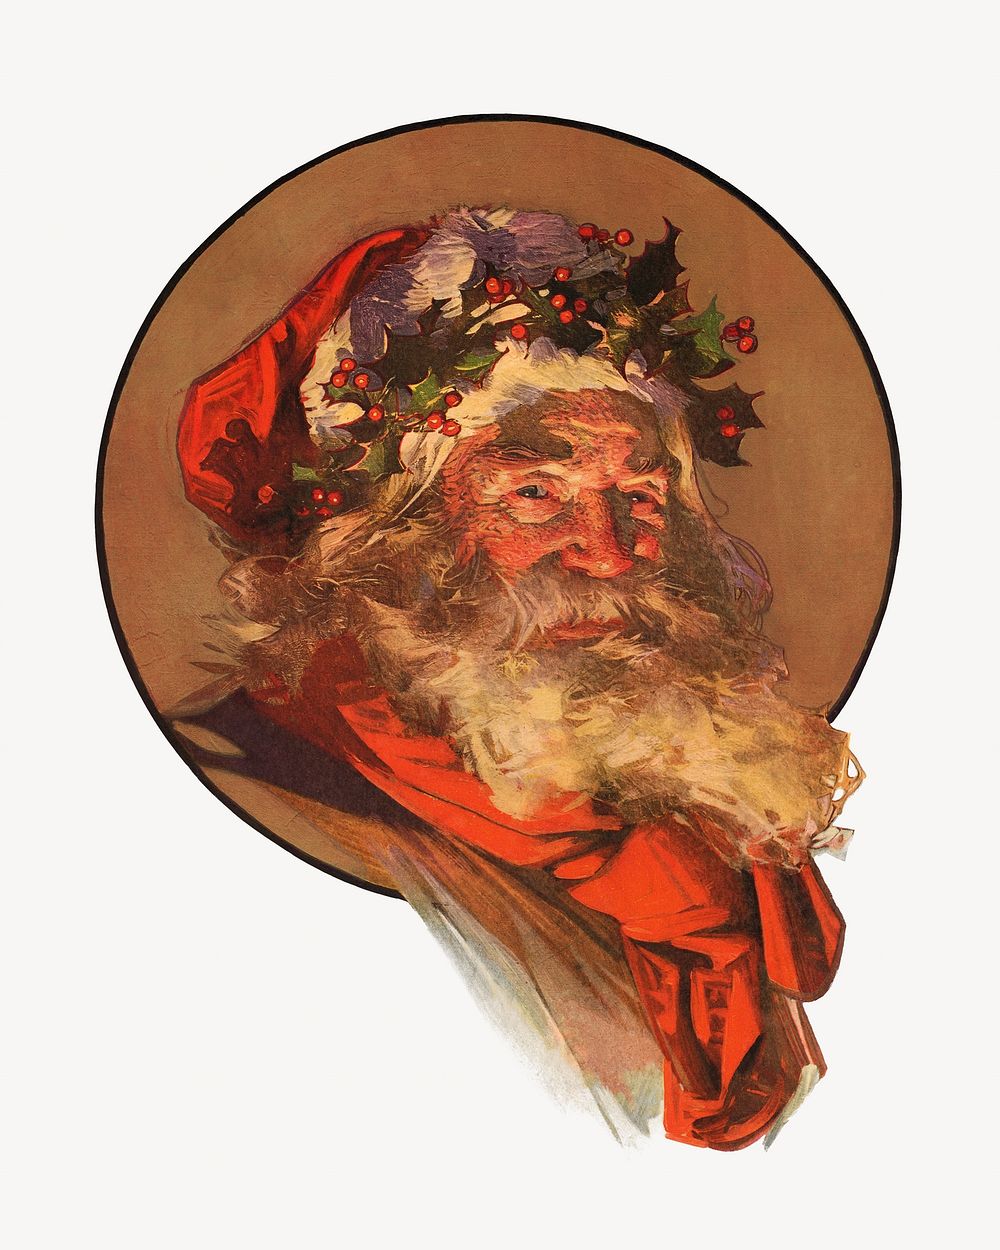 Santa Claus, vintage portrait illustration.   Remastered by rawpixel